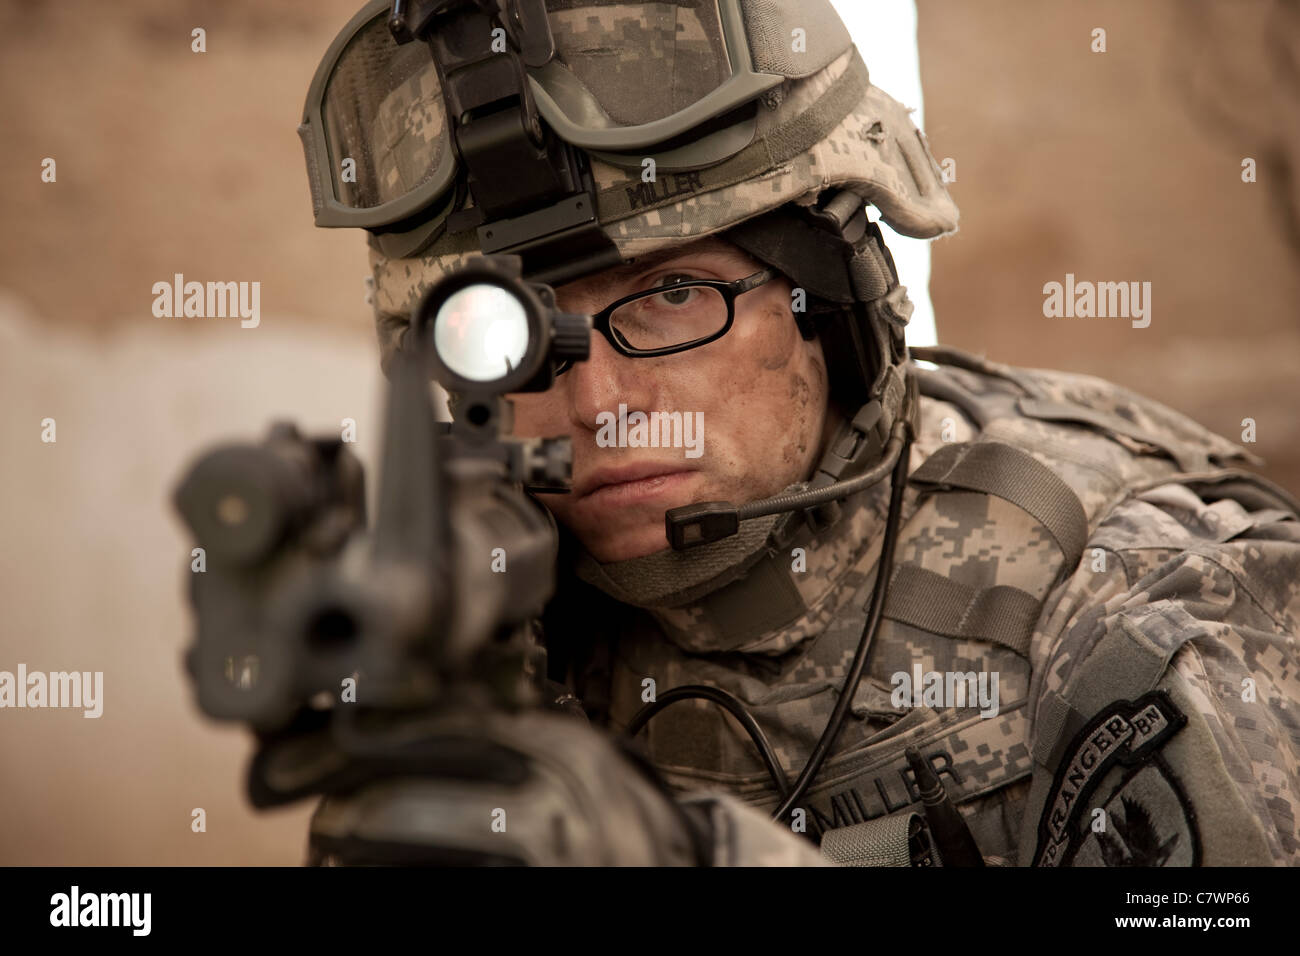 U.S. Army Ranger in Afghanistan combat scene. Stock Photo